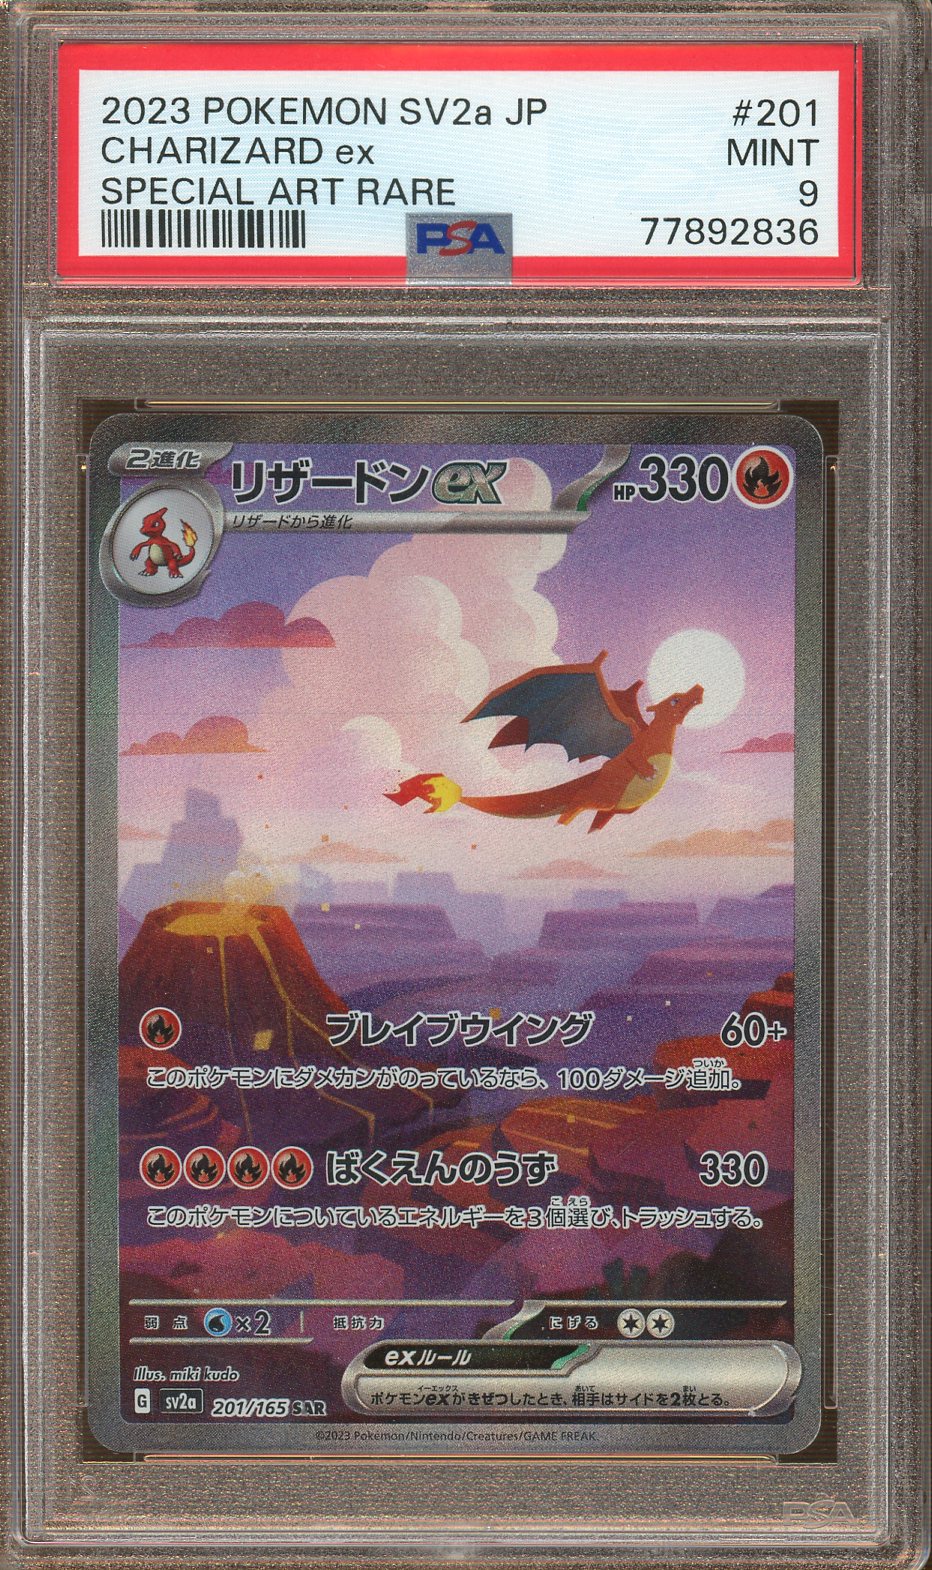 PSA -  MINT 9 - 2023 - Pokemon - SV2a - Charizard ex - Special Art Rare - Japanese